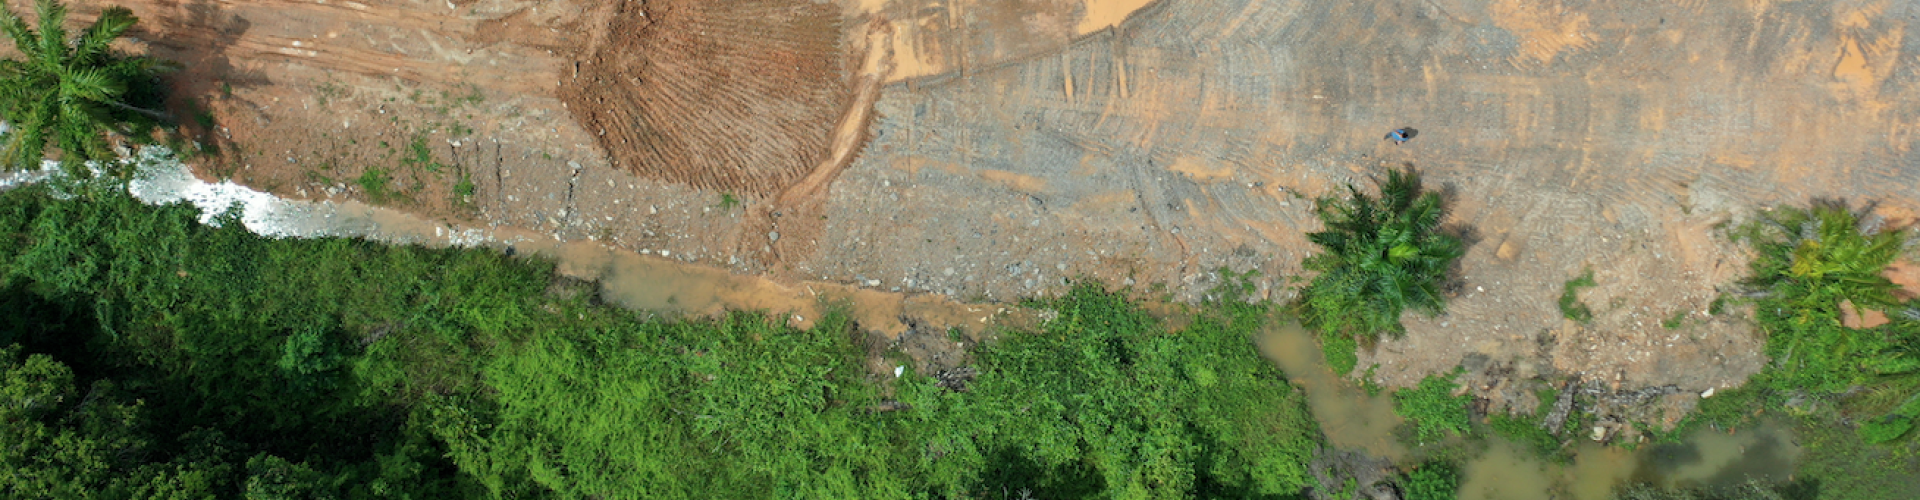 Environmental impacts of mining